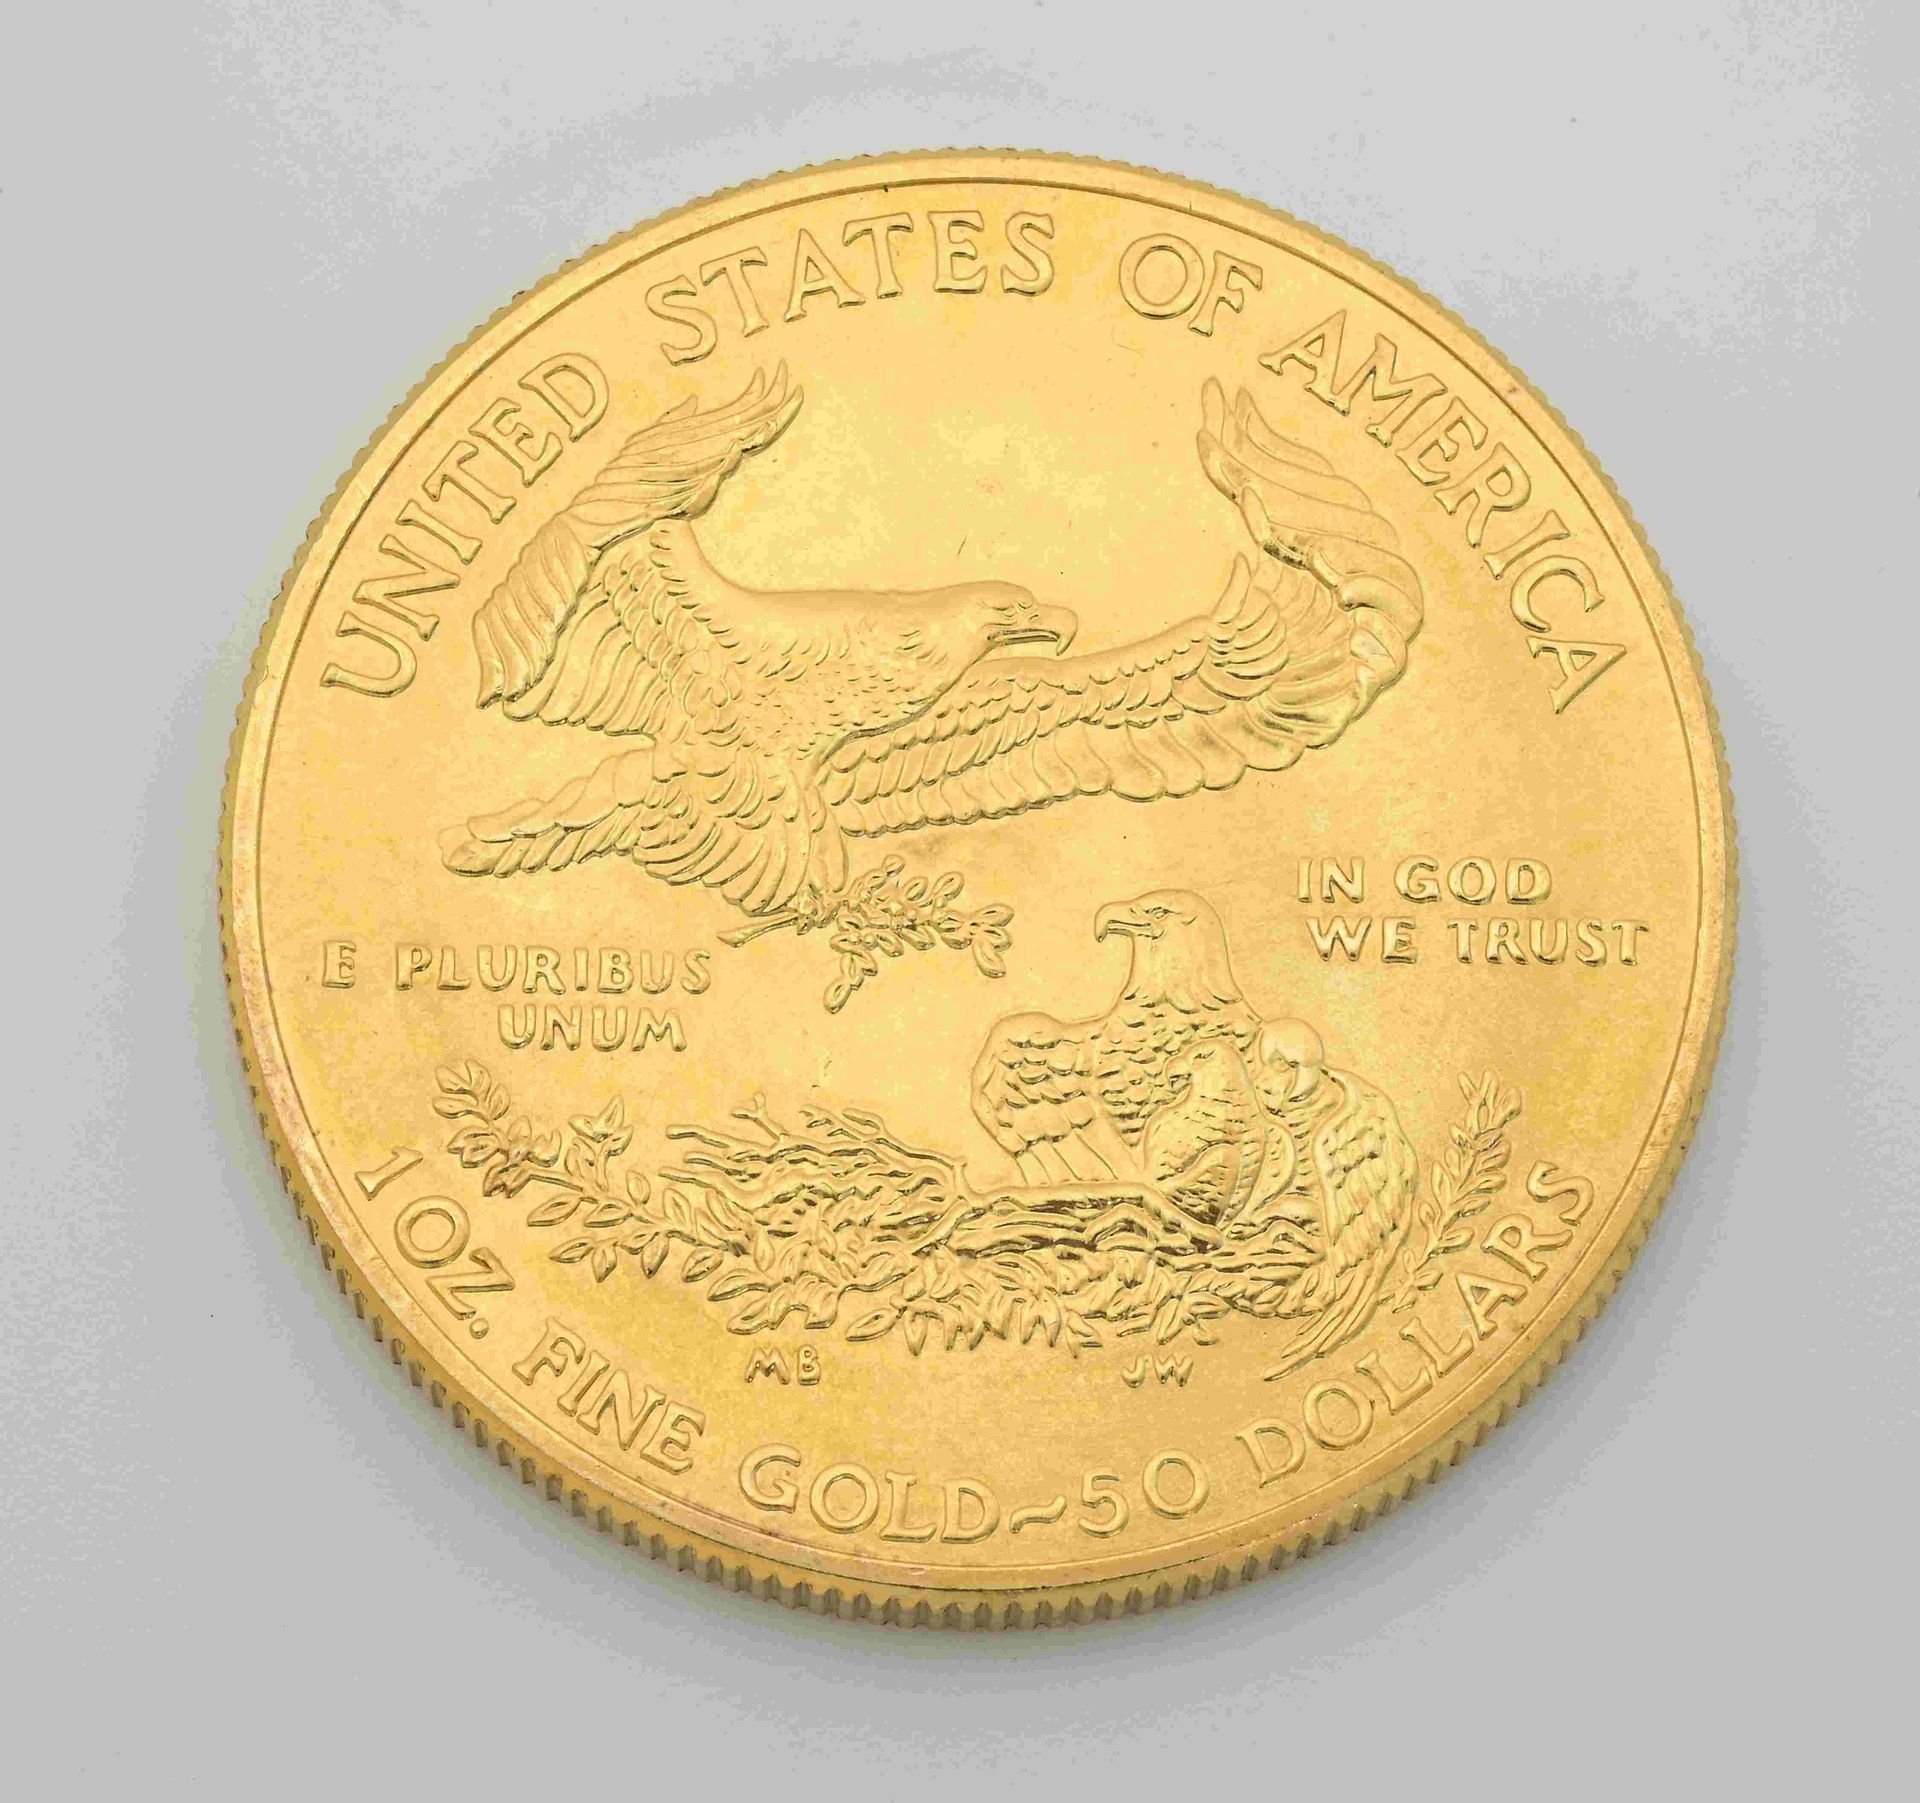 Null 50美元一盎司精制金币，2012年圣高登斯。
在独立的胶囊盒中。
状况非常好。PN : 33,89 g。 	
MARSEILLE司法法庭移交的财产

&hellip;